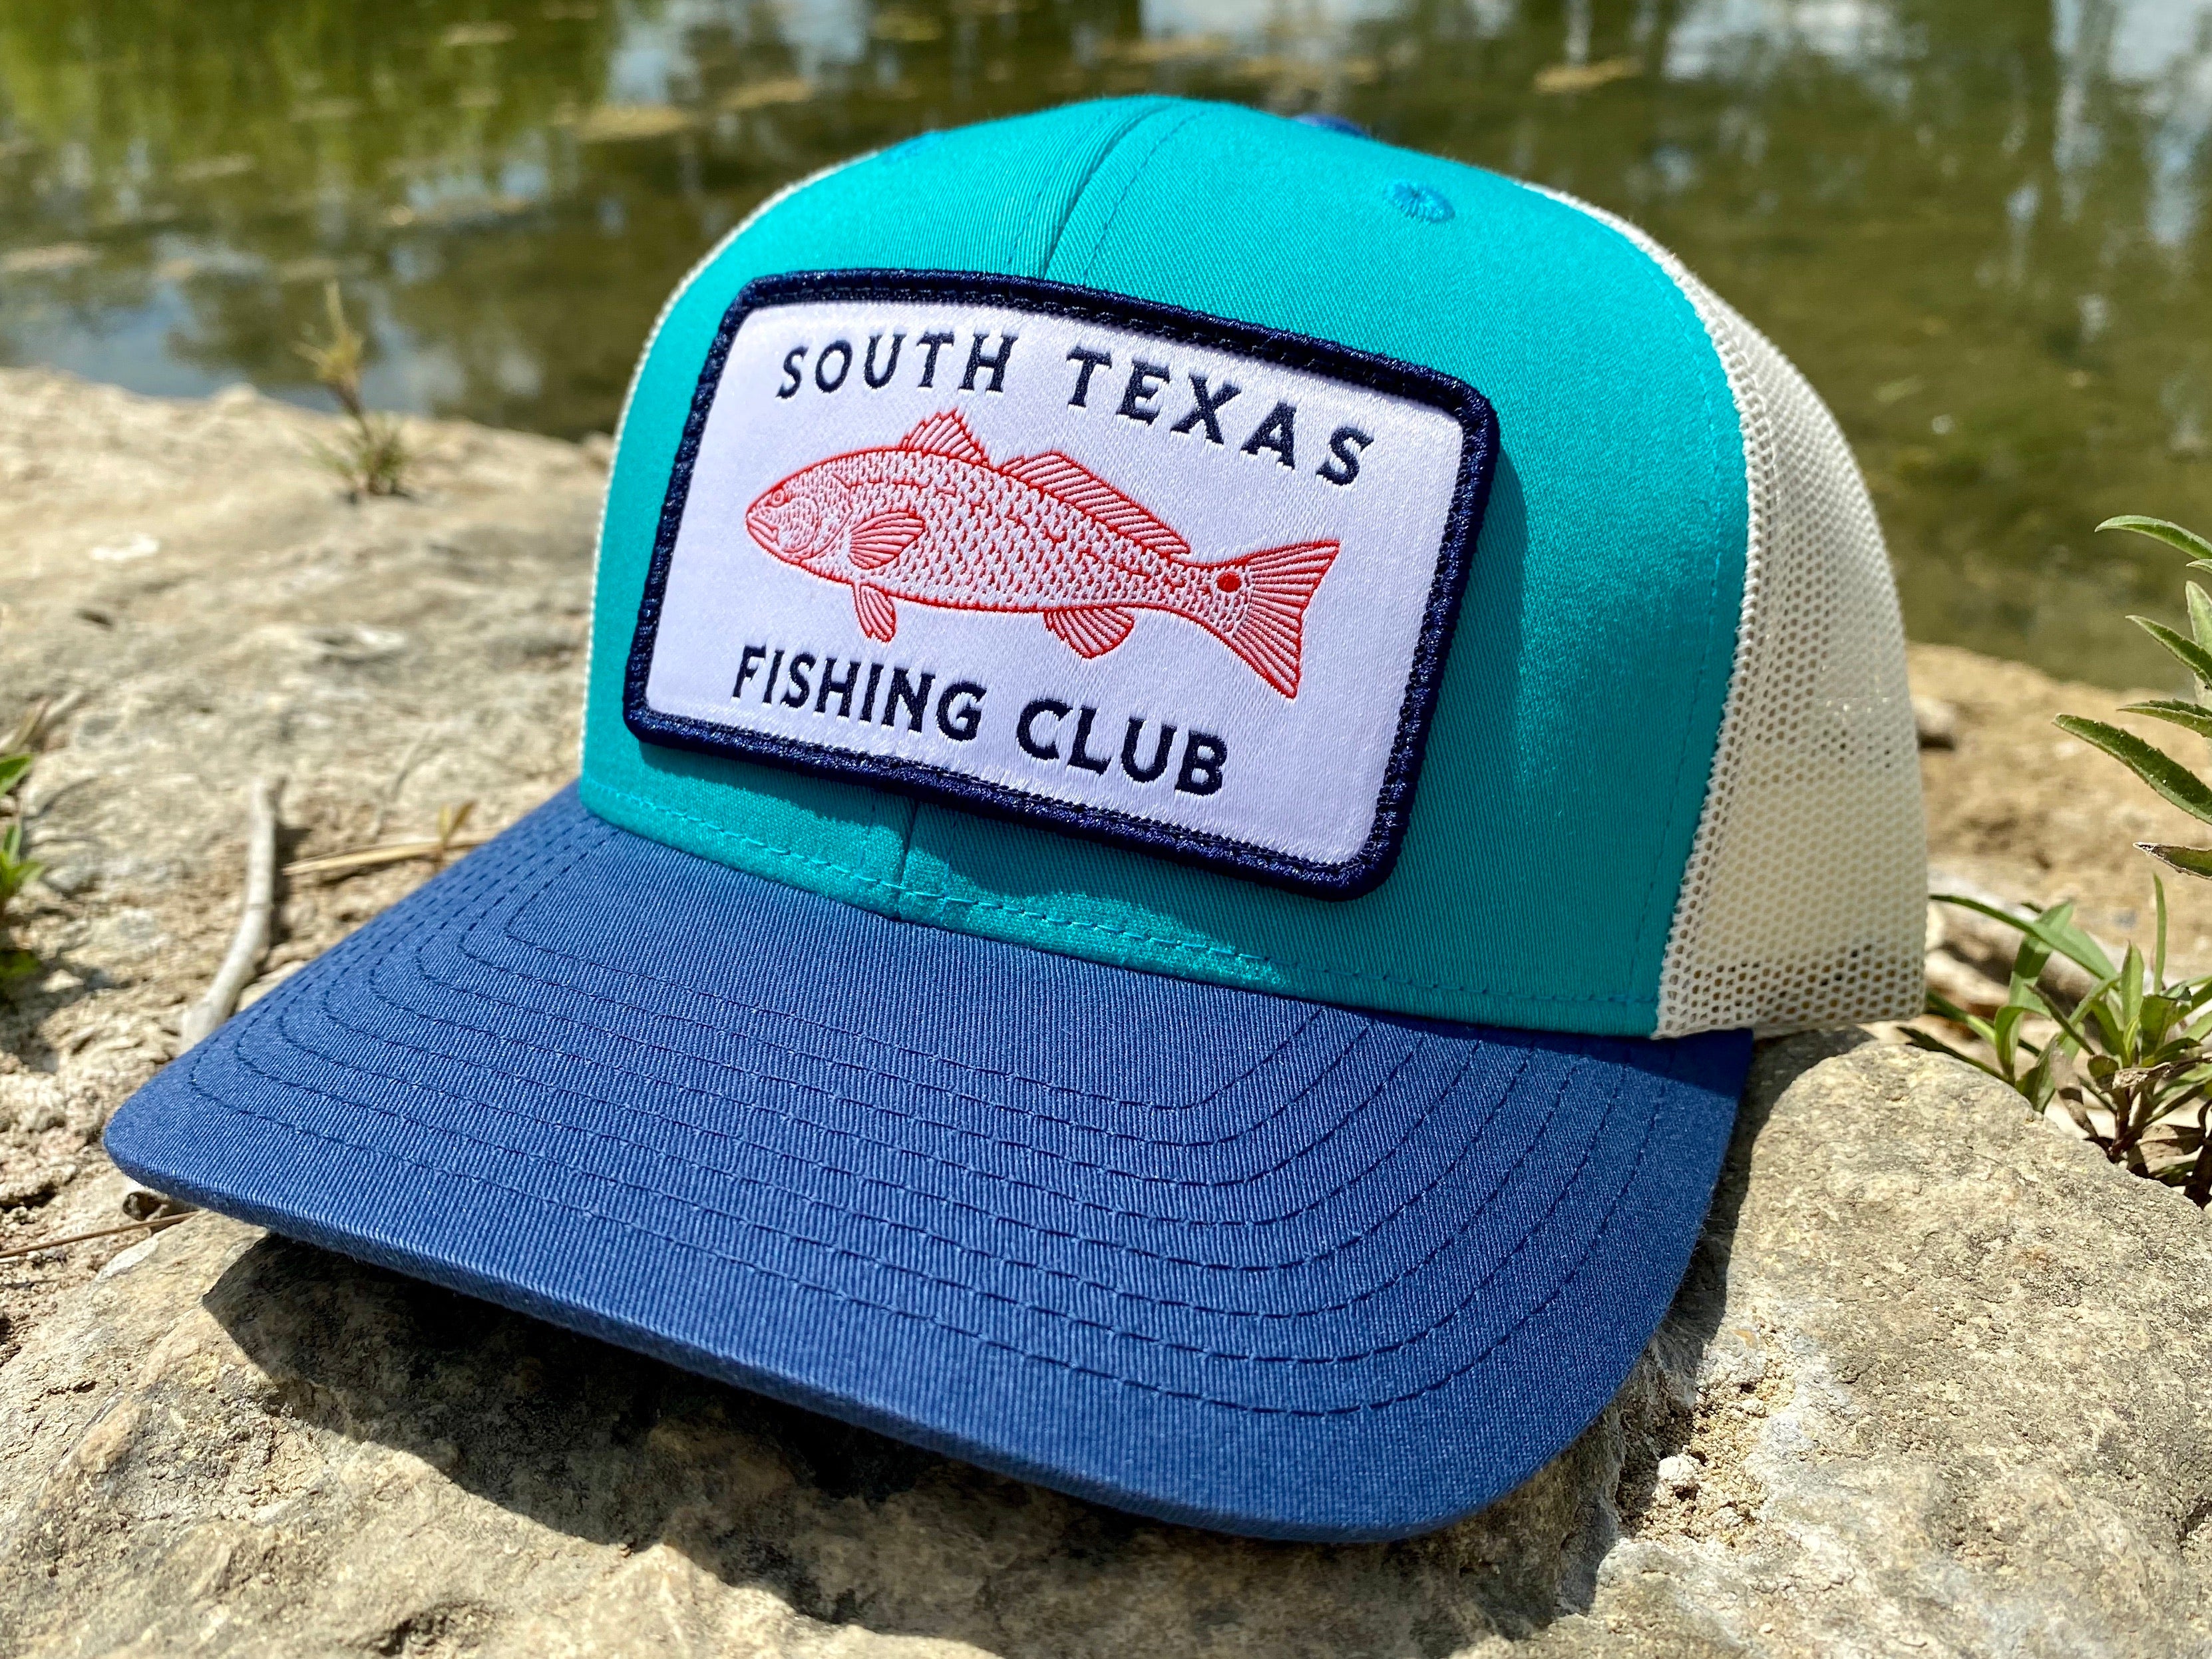 South Texas Fishing Club Trucker Hat - Teal/Tan/Blue